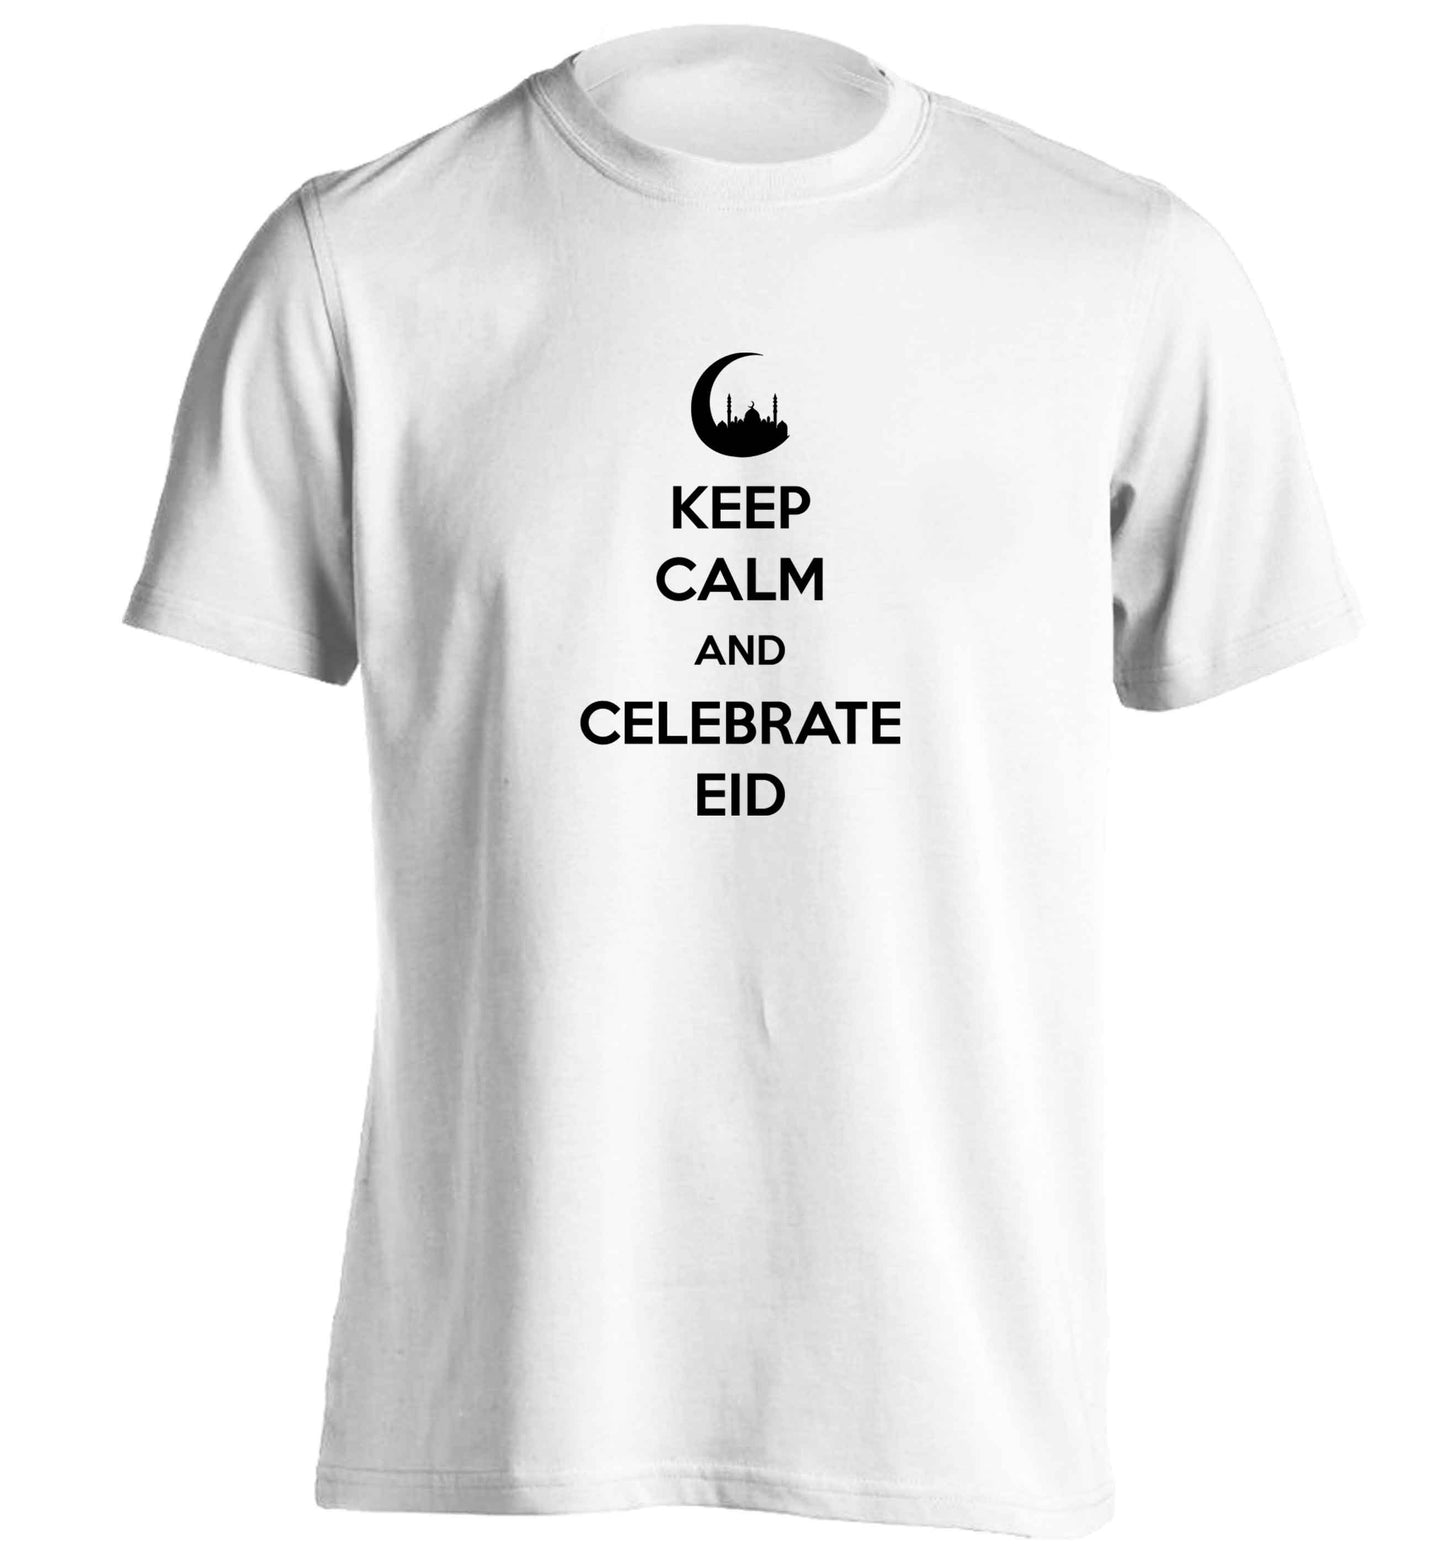 Keep calm and celebrate Eid adults unisex white Tshirt 2XL